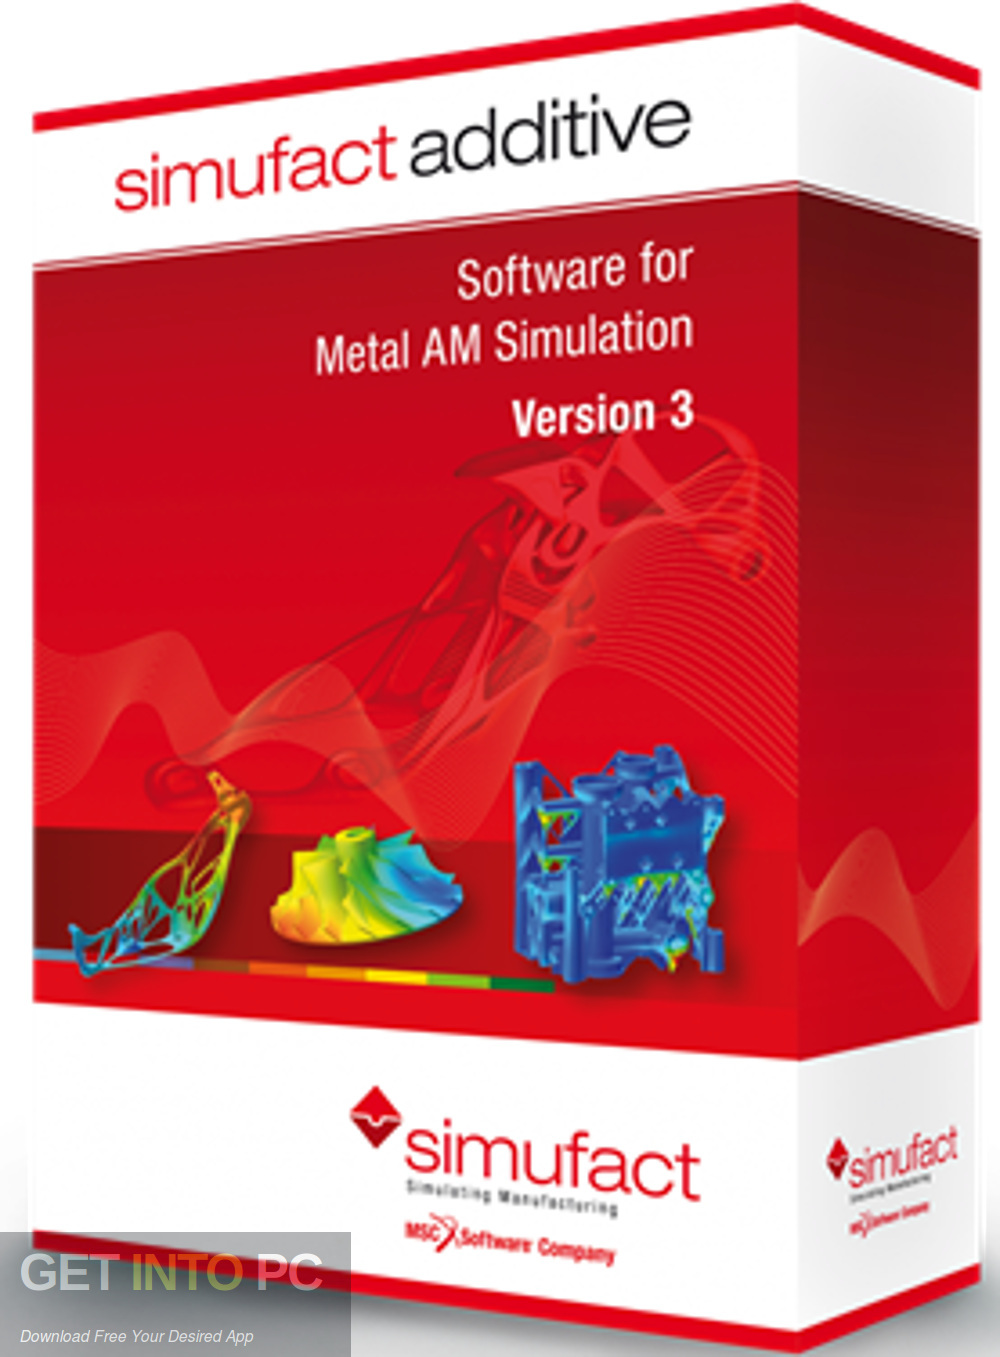 MSC Simufact Additive Free Download-GetintoPC.com